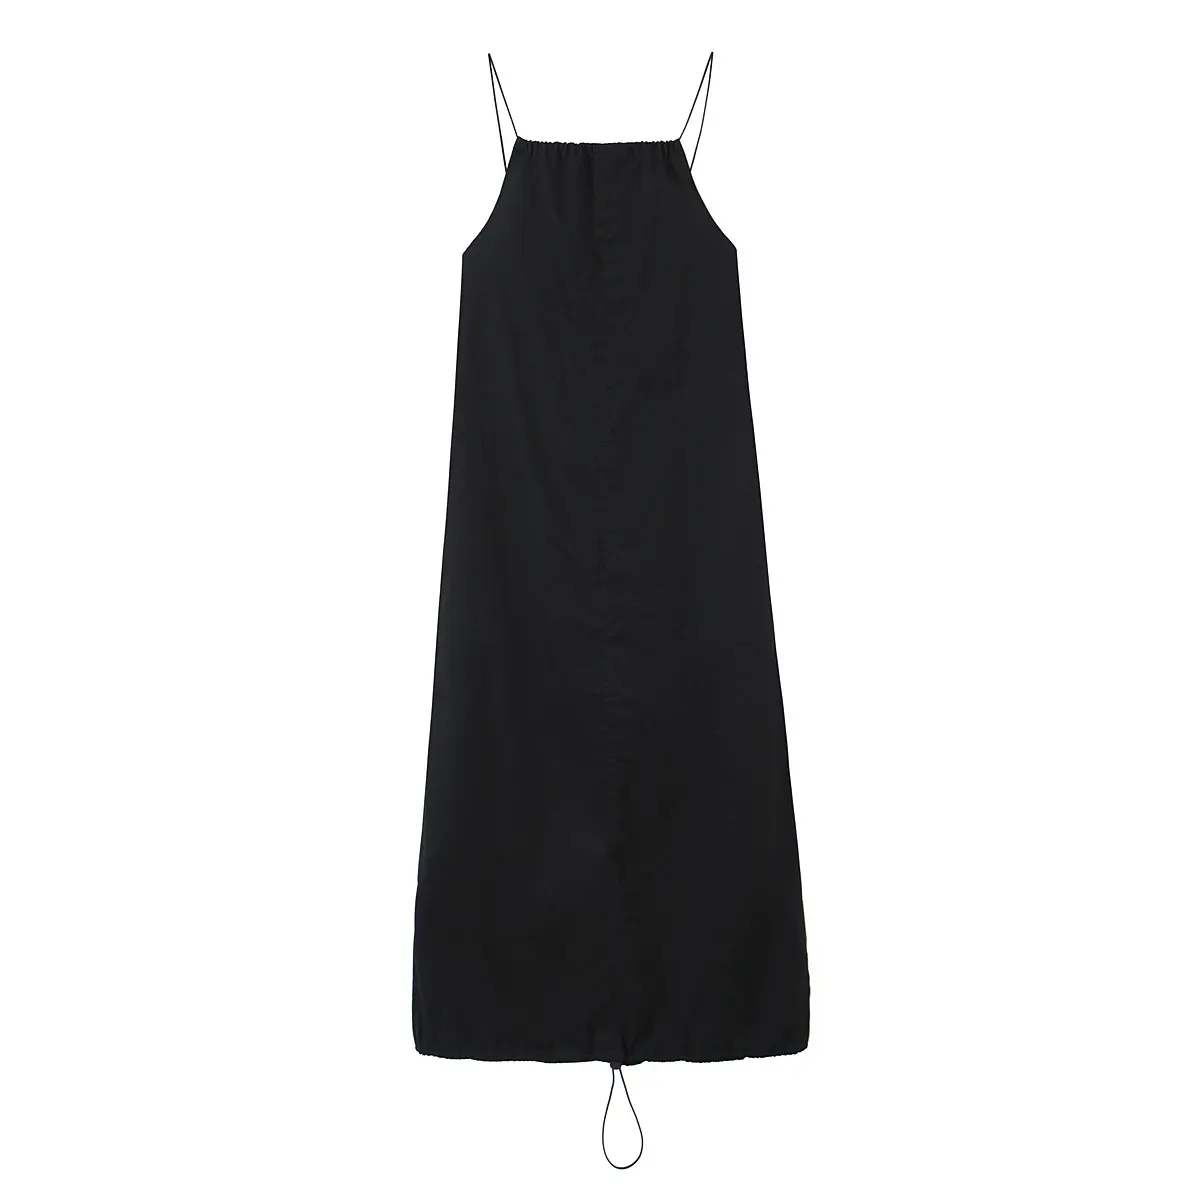 Hot sale black color sleeveless casual fashion women midi slip dress